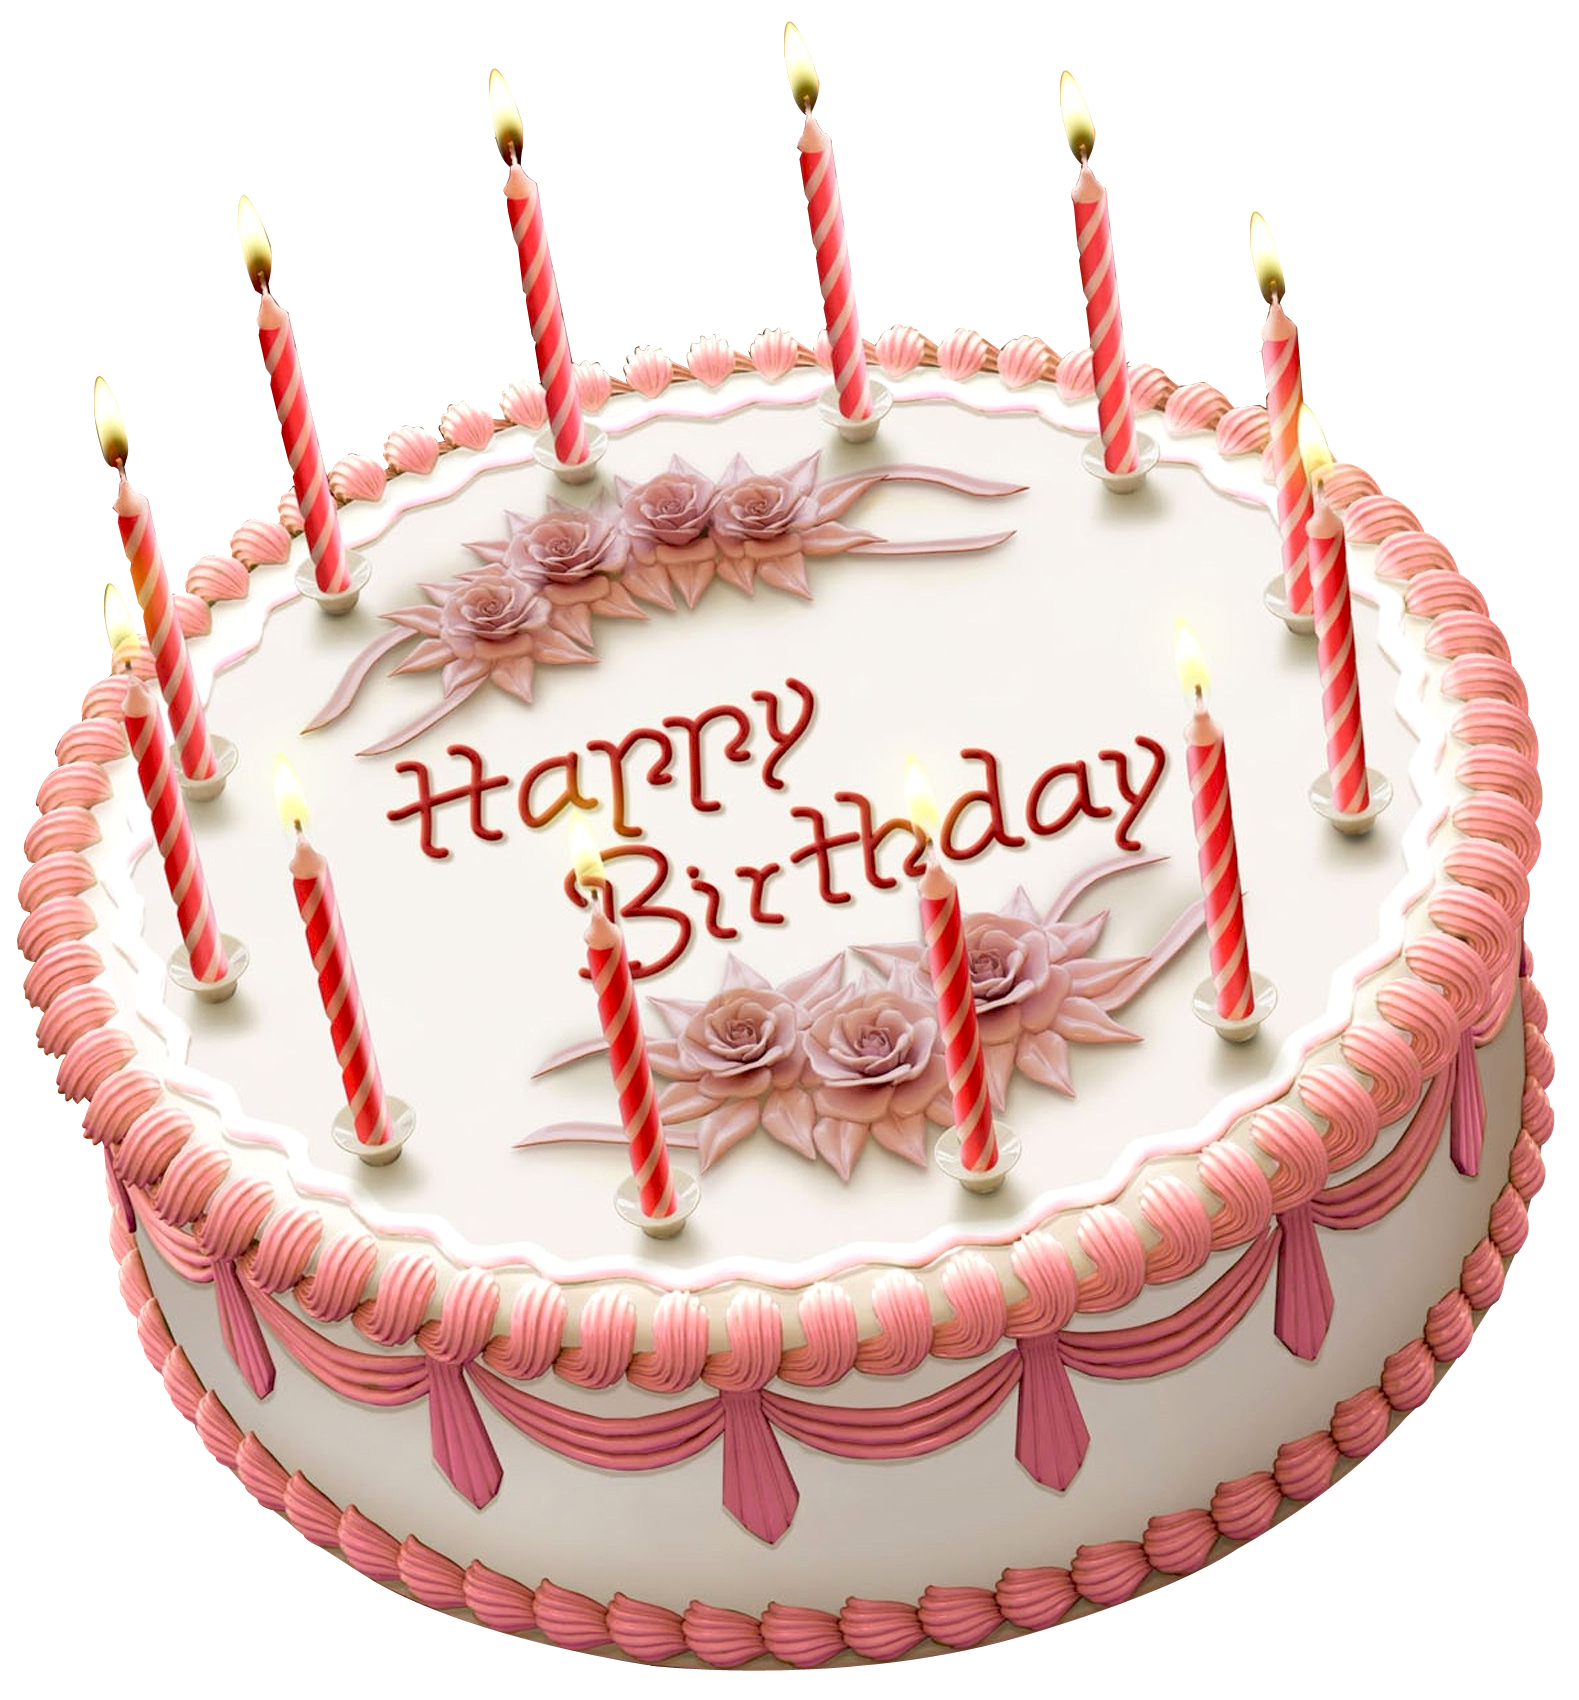 Birthday Cake PNG HD